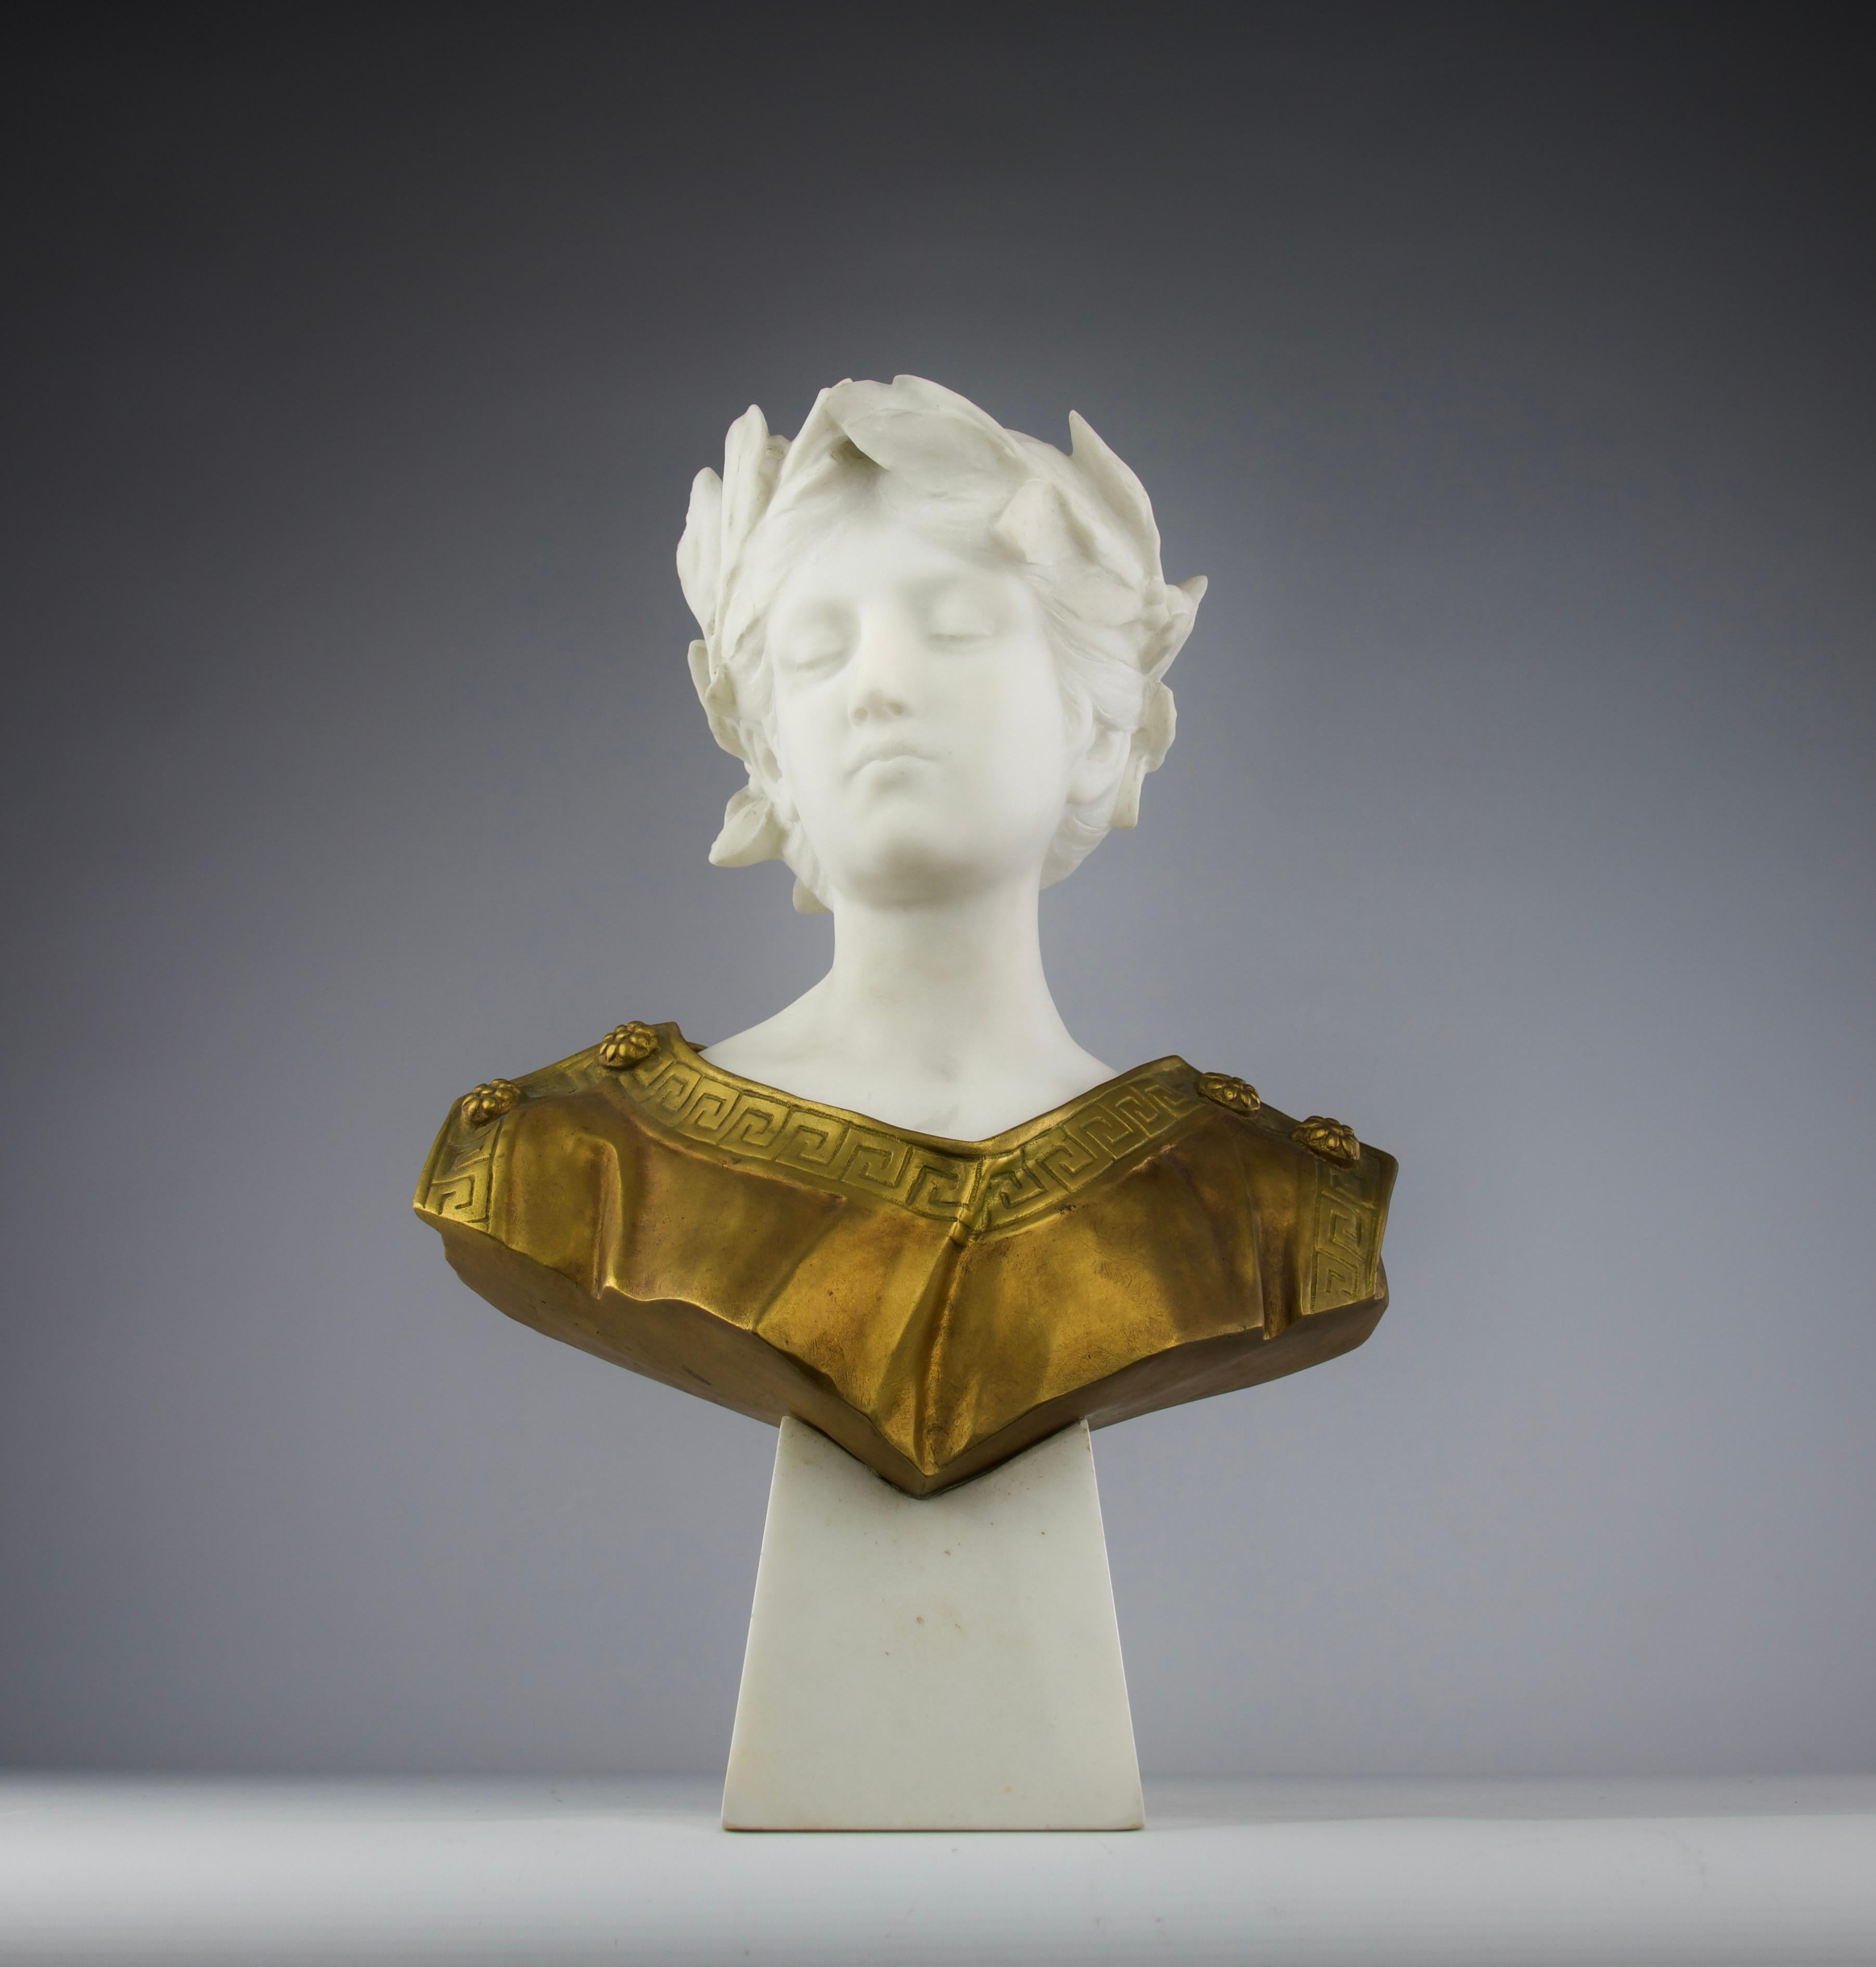 Romantic Attilio Fagioli, Young Emperor Bust Sculpture, Italy Early 20th Century For Sale